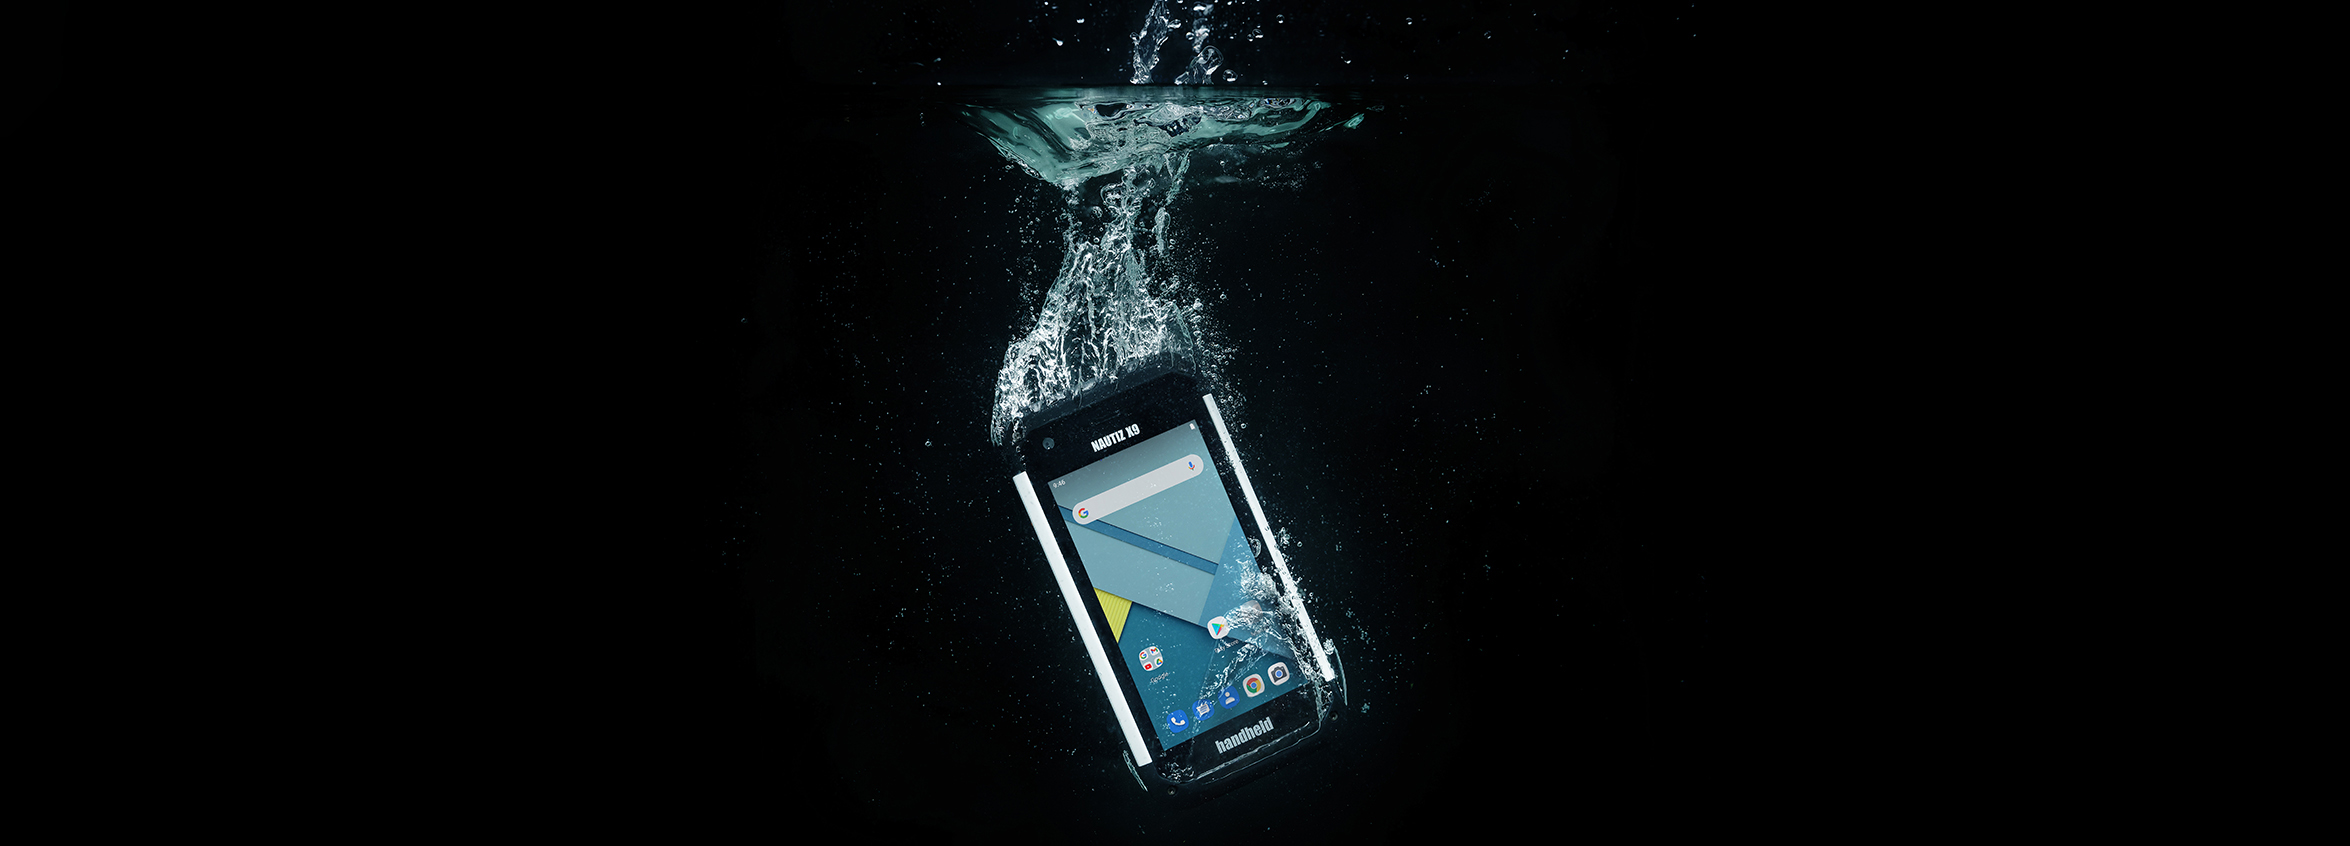 PDA underwater